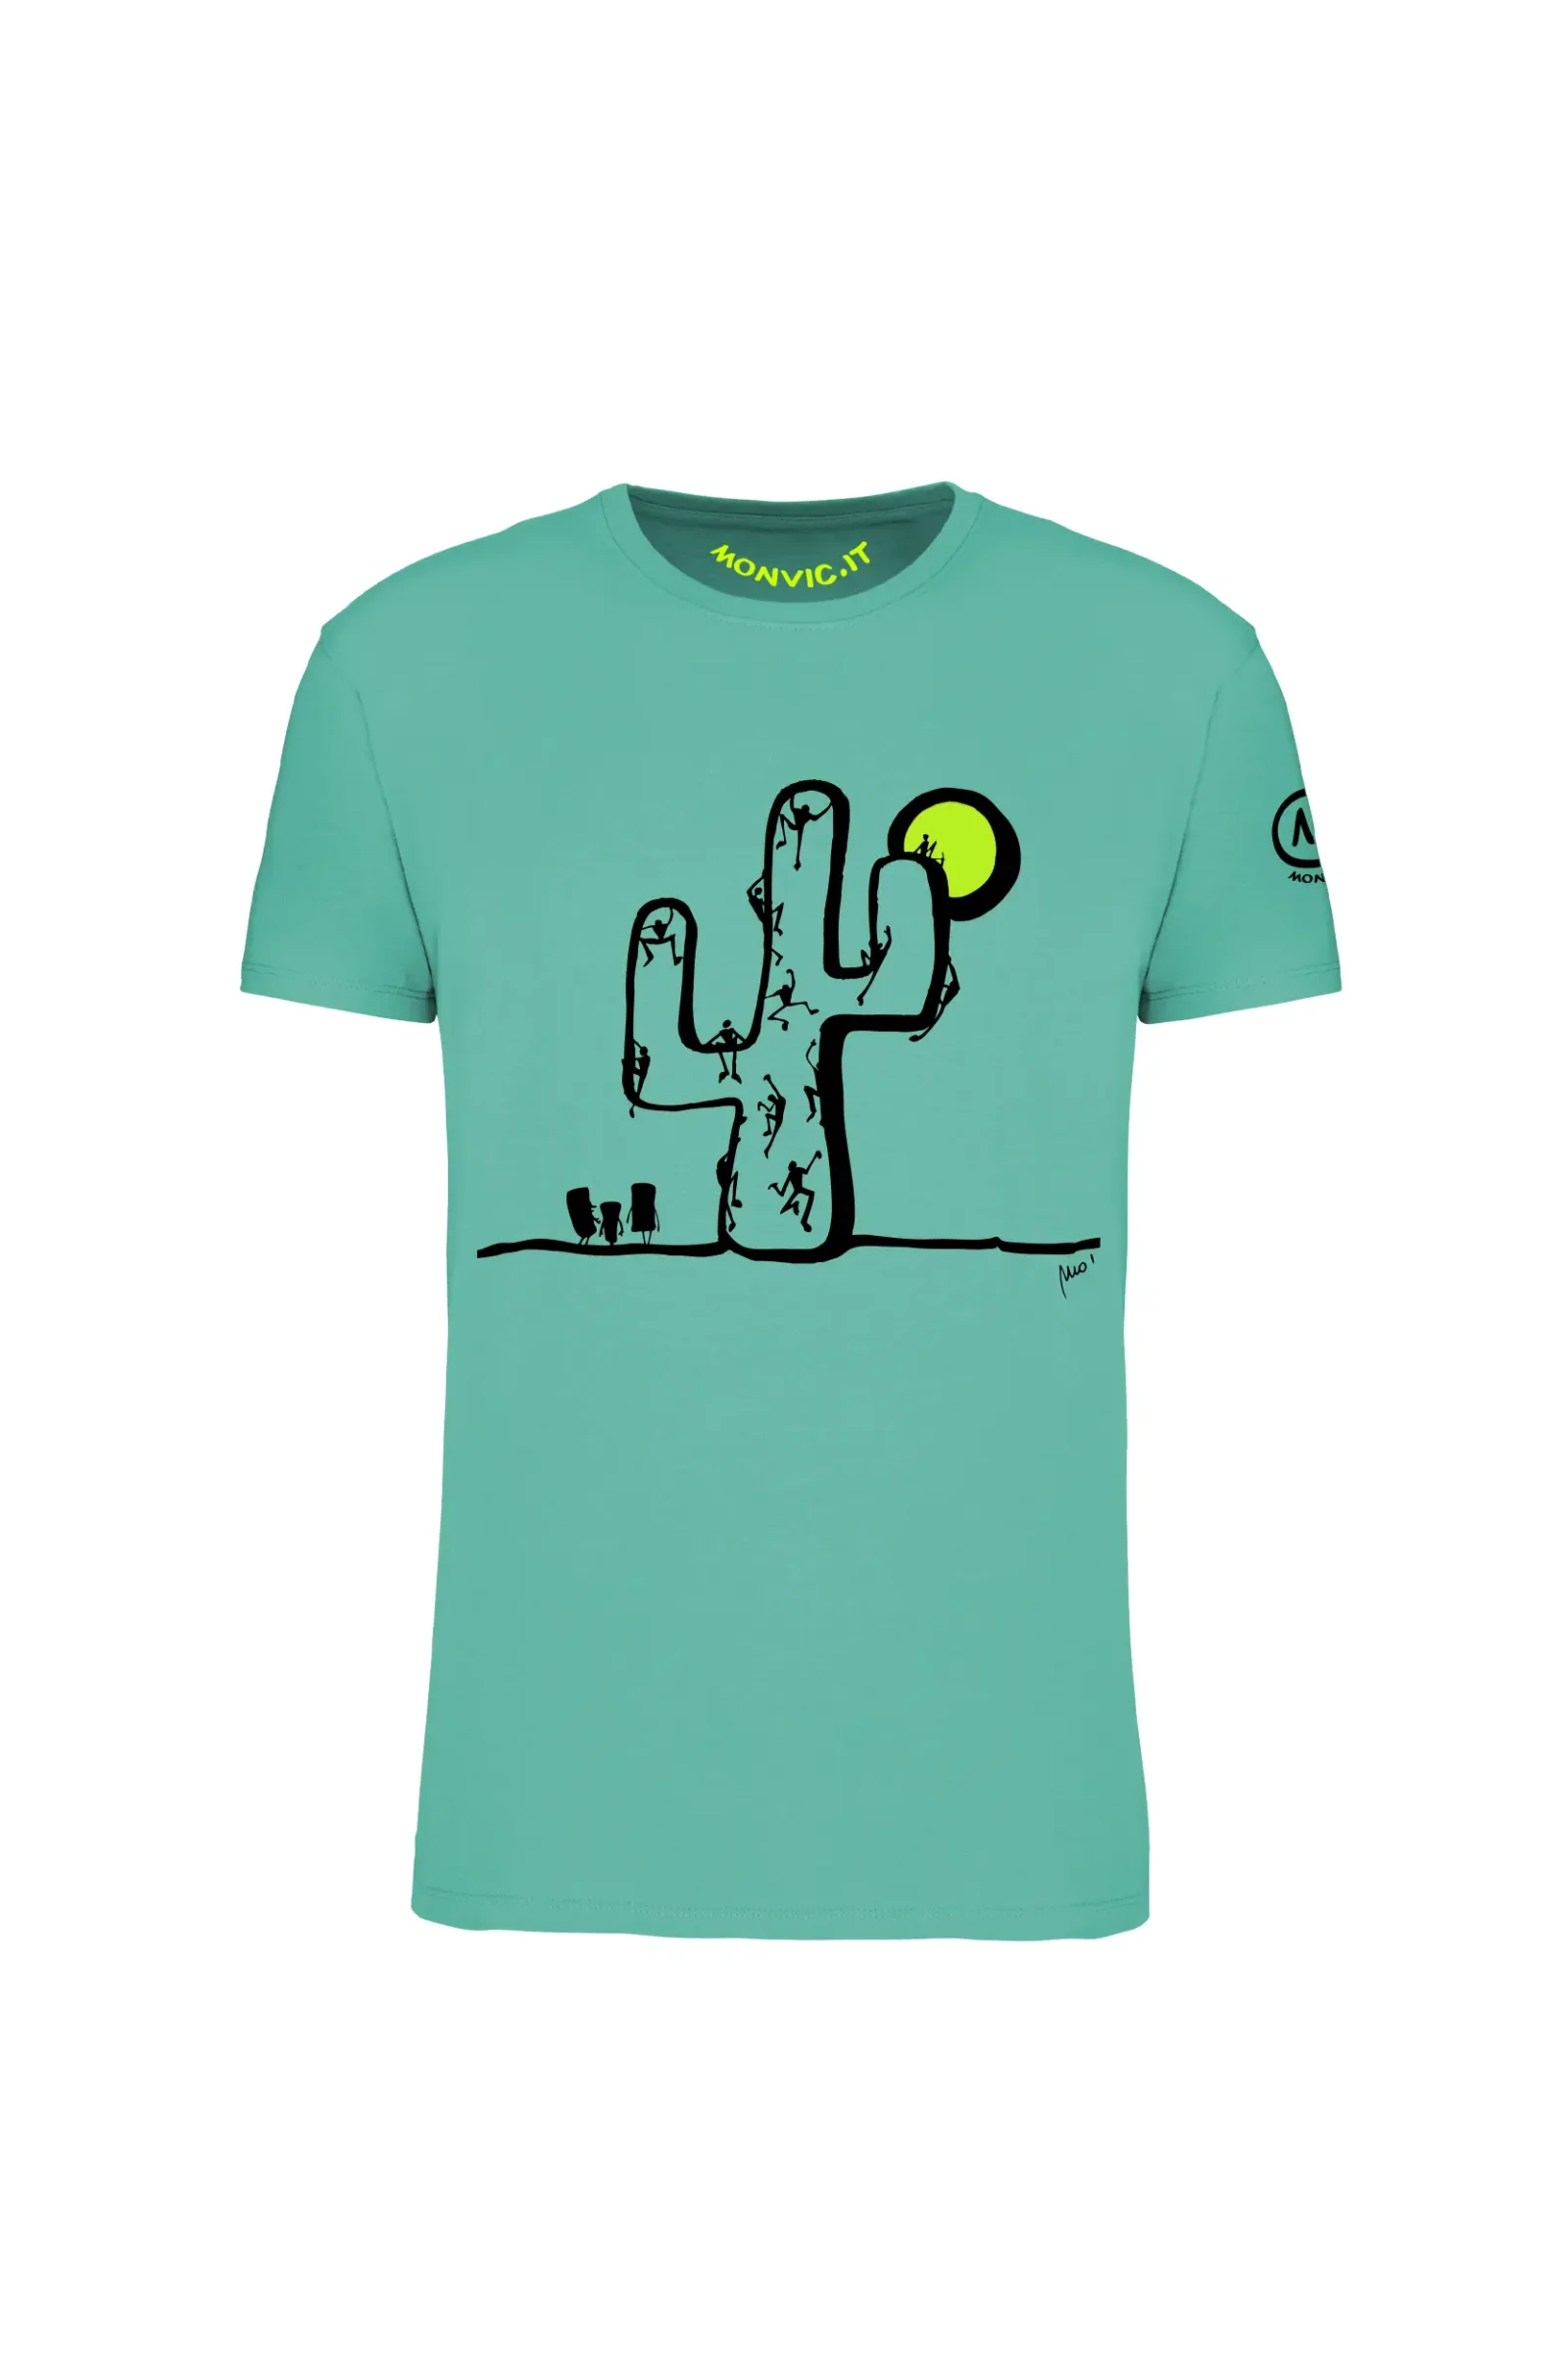 Men's climbing t-shirt - emerald green organic cotton - "Cactus" - HASH ORGANIC MONVIC